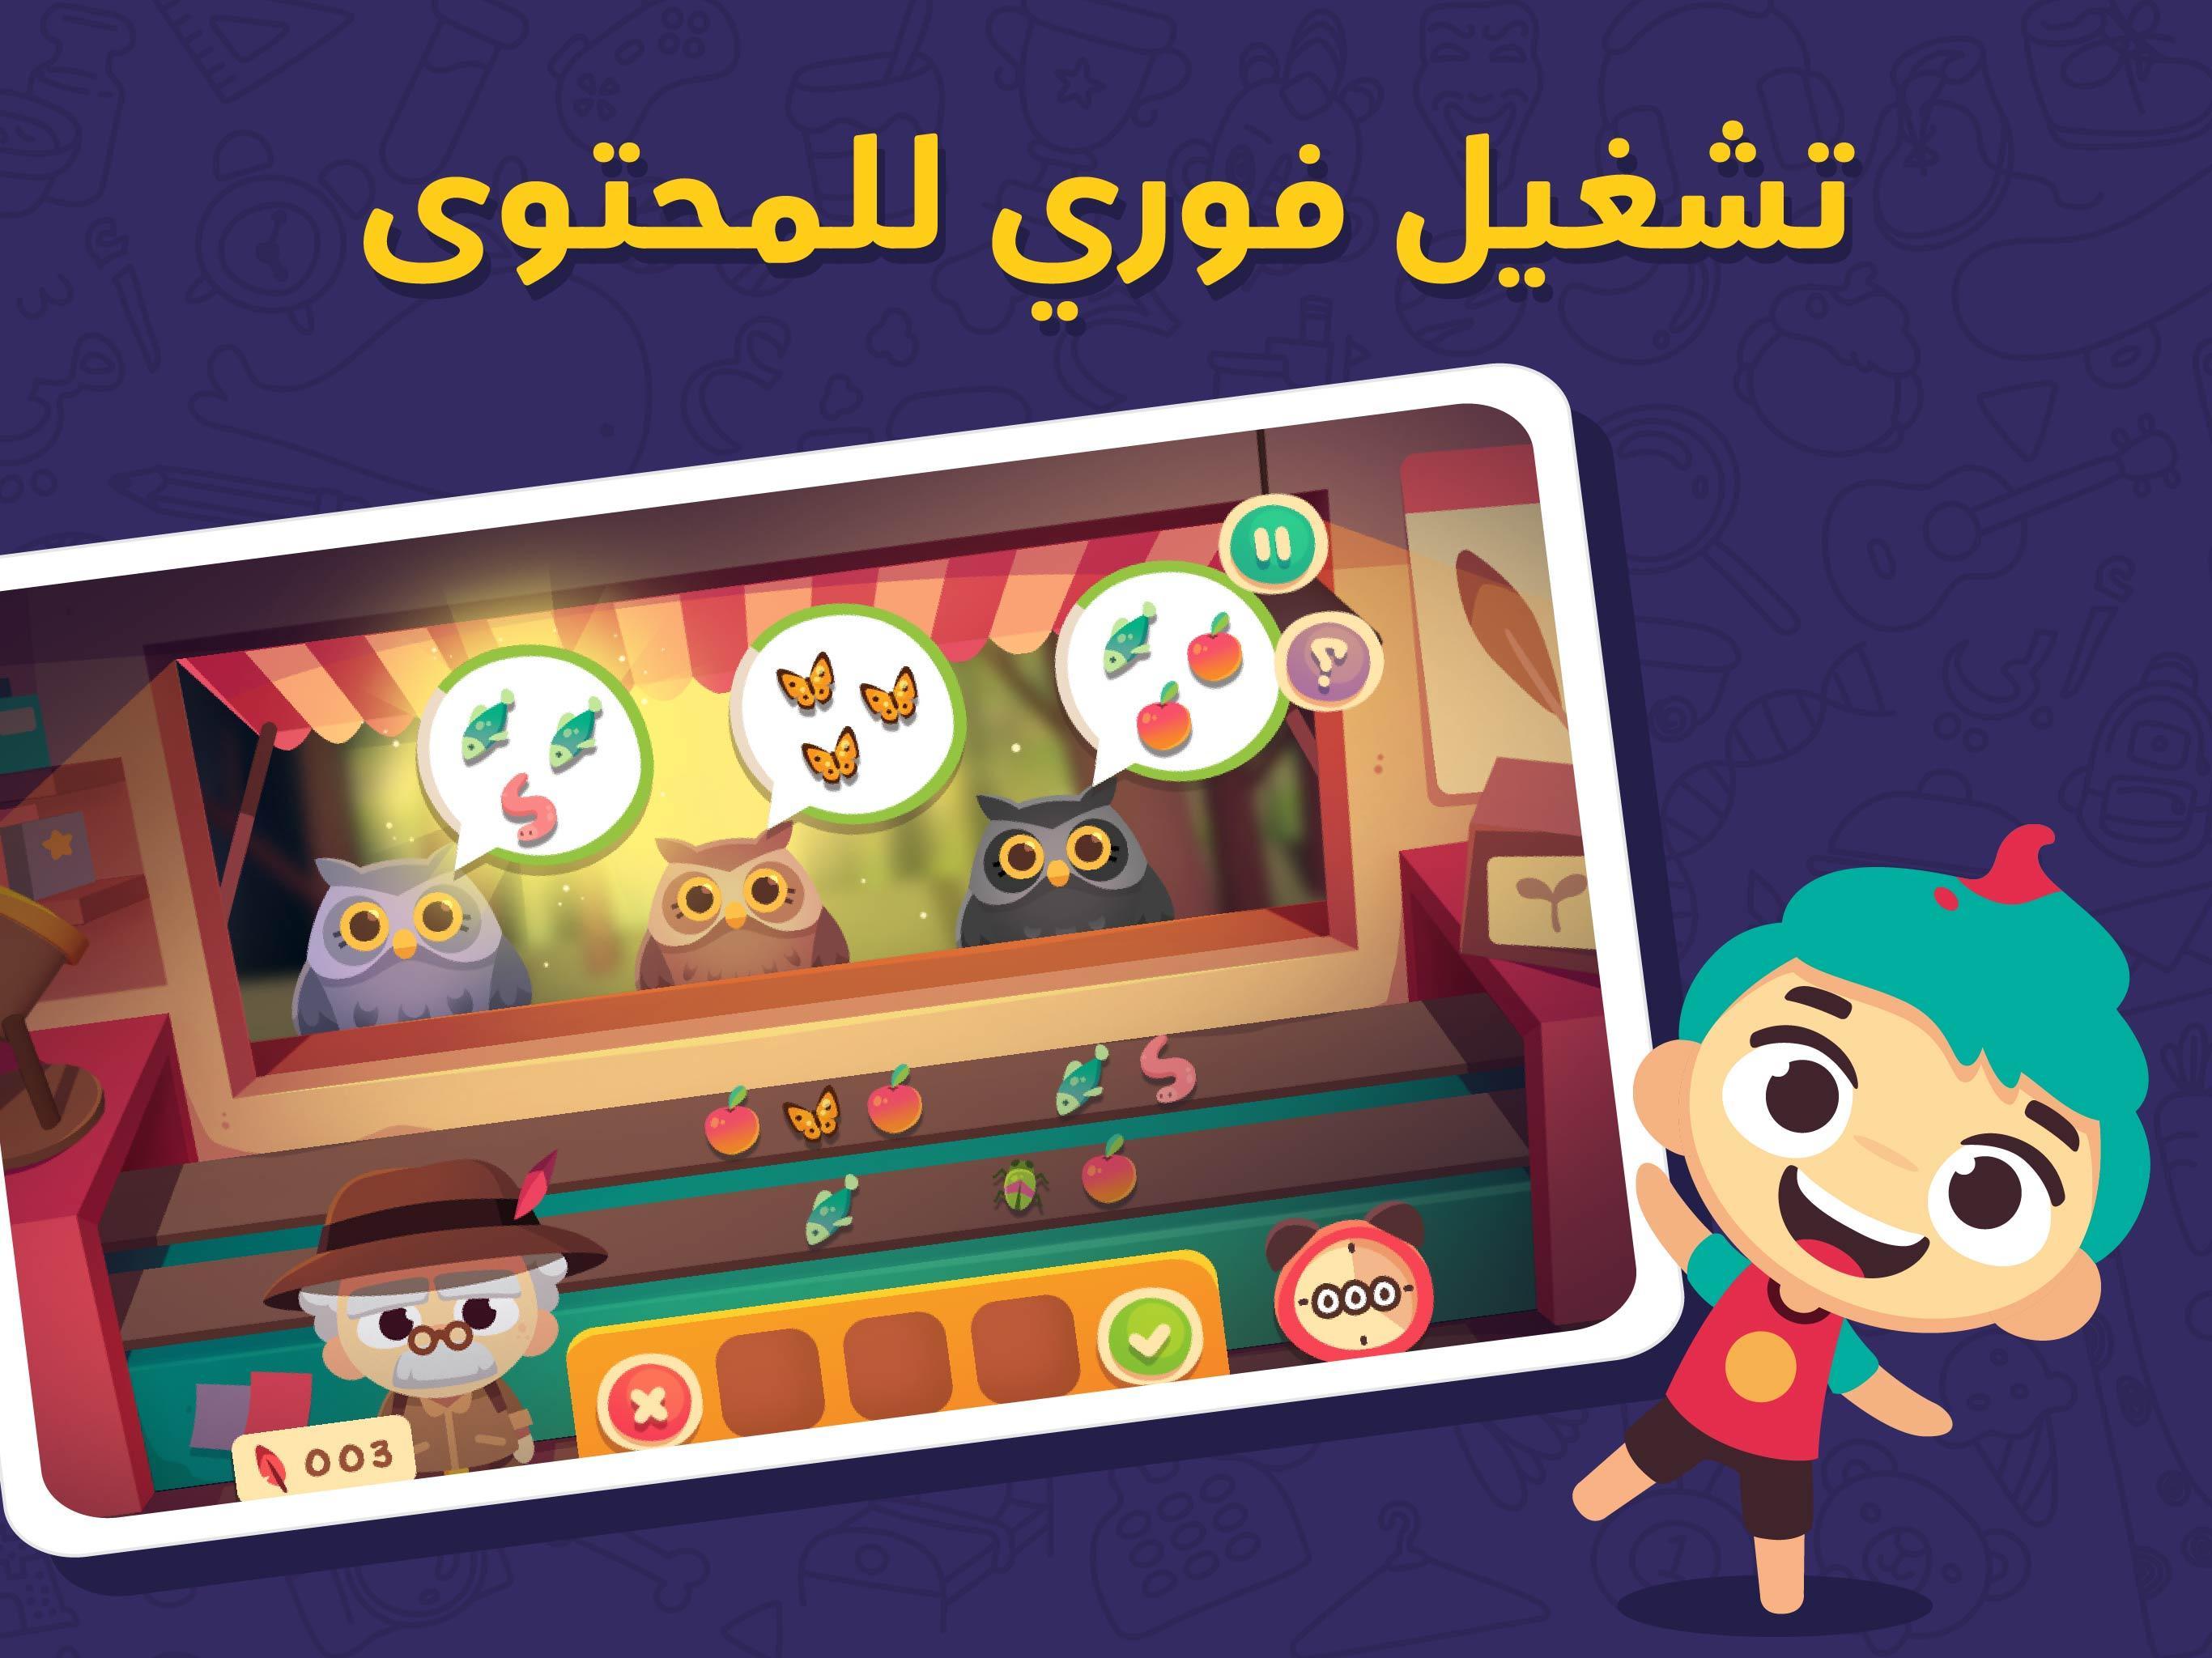 Lamsa Stories, Games, and Activities for Children 4.18.0 Screenshot 12